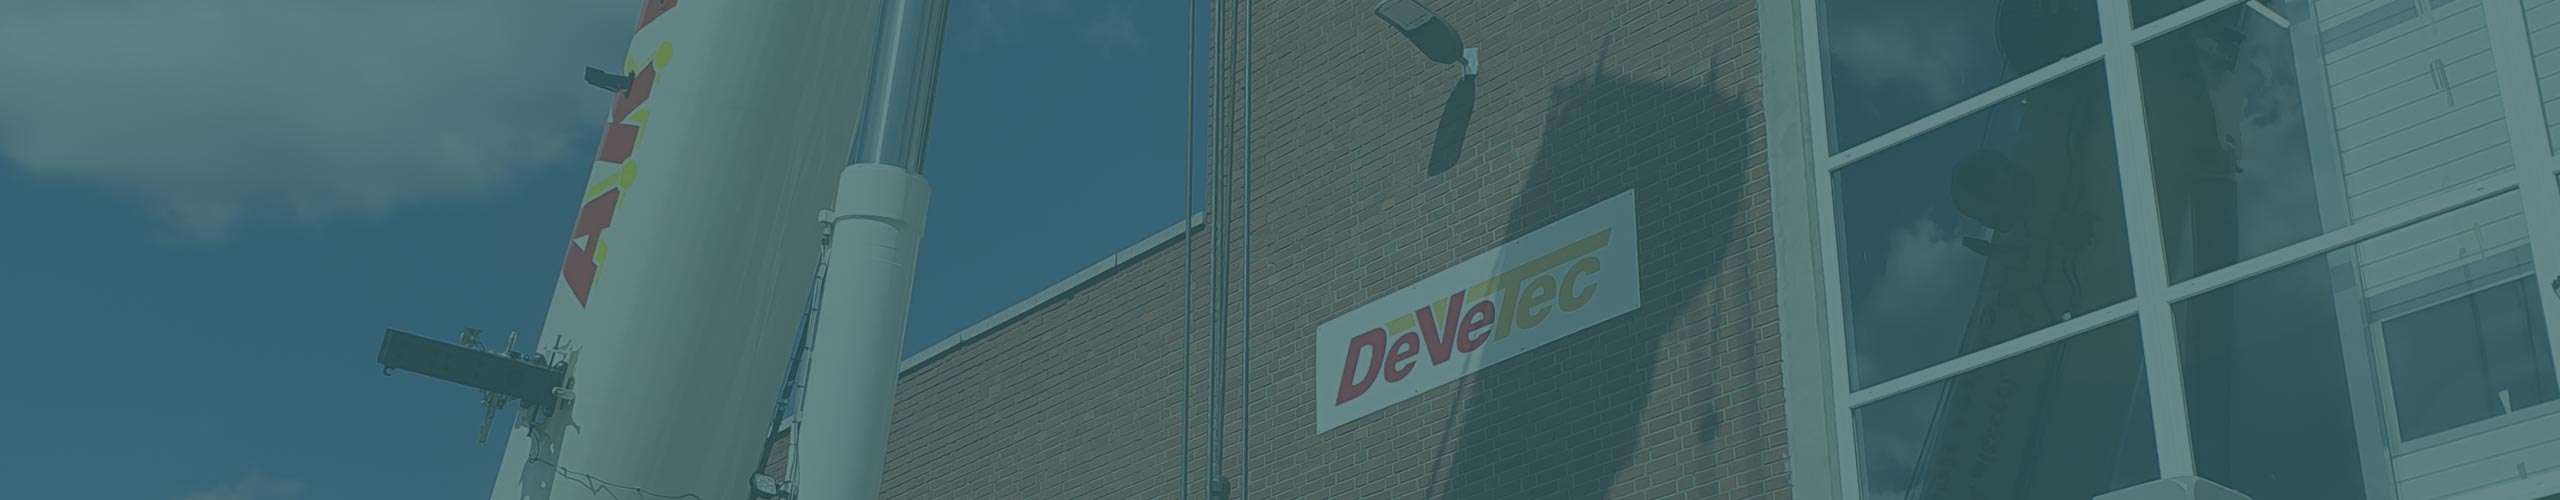 Company - DeVeTec GmbH